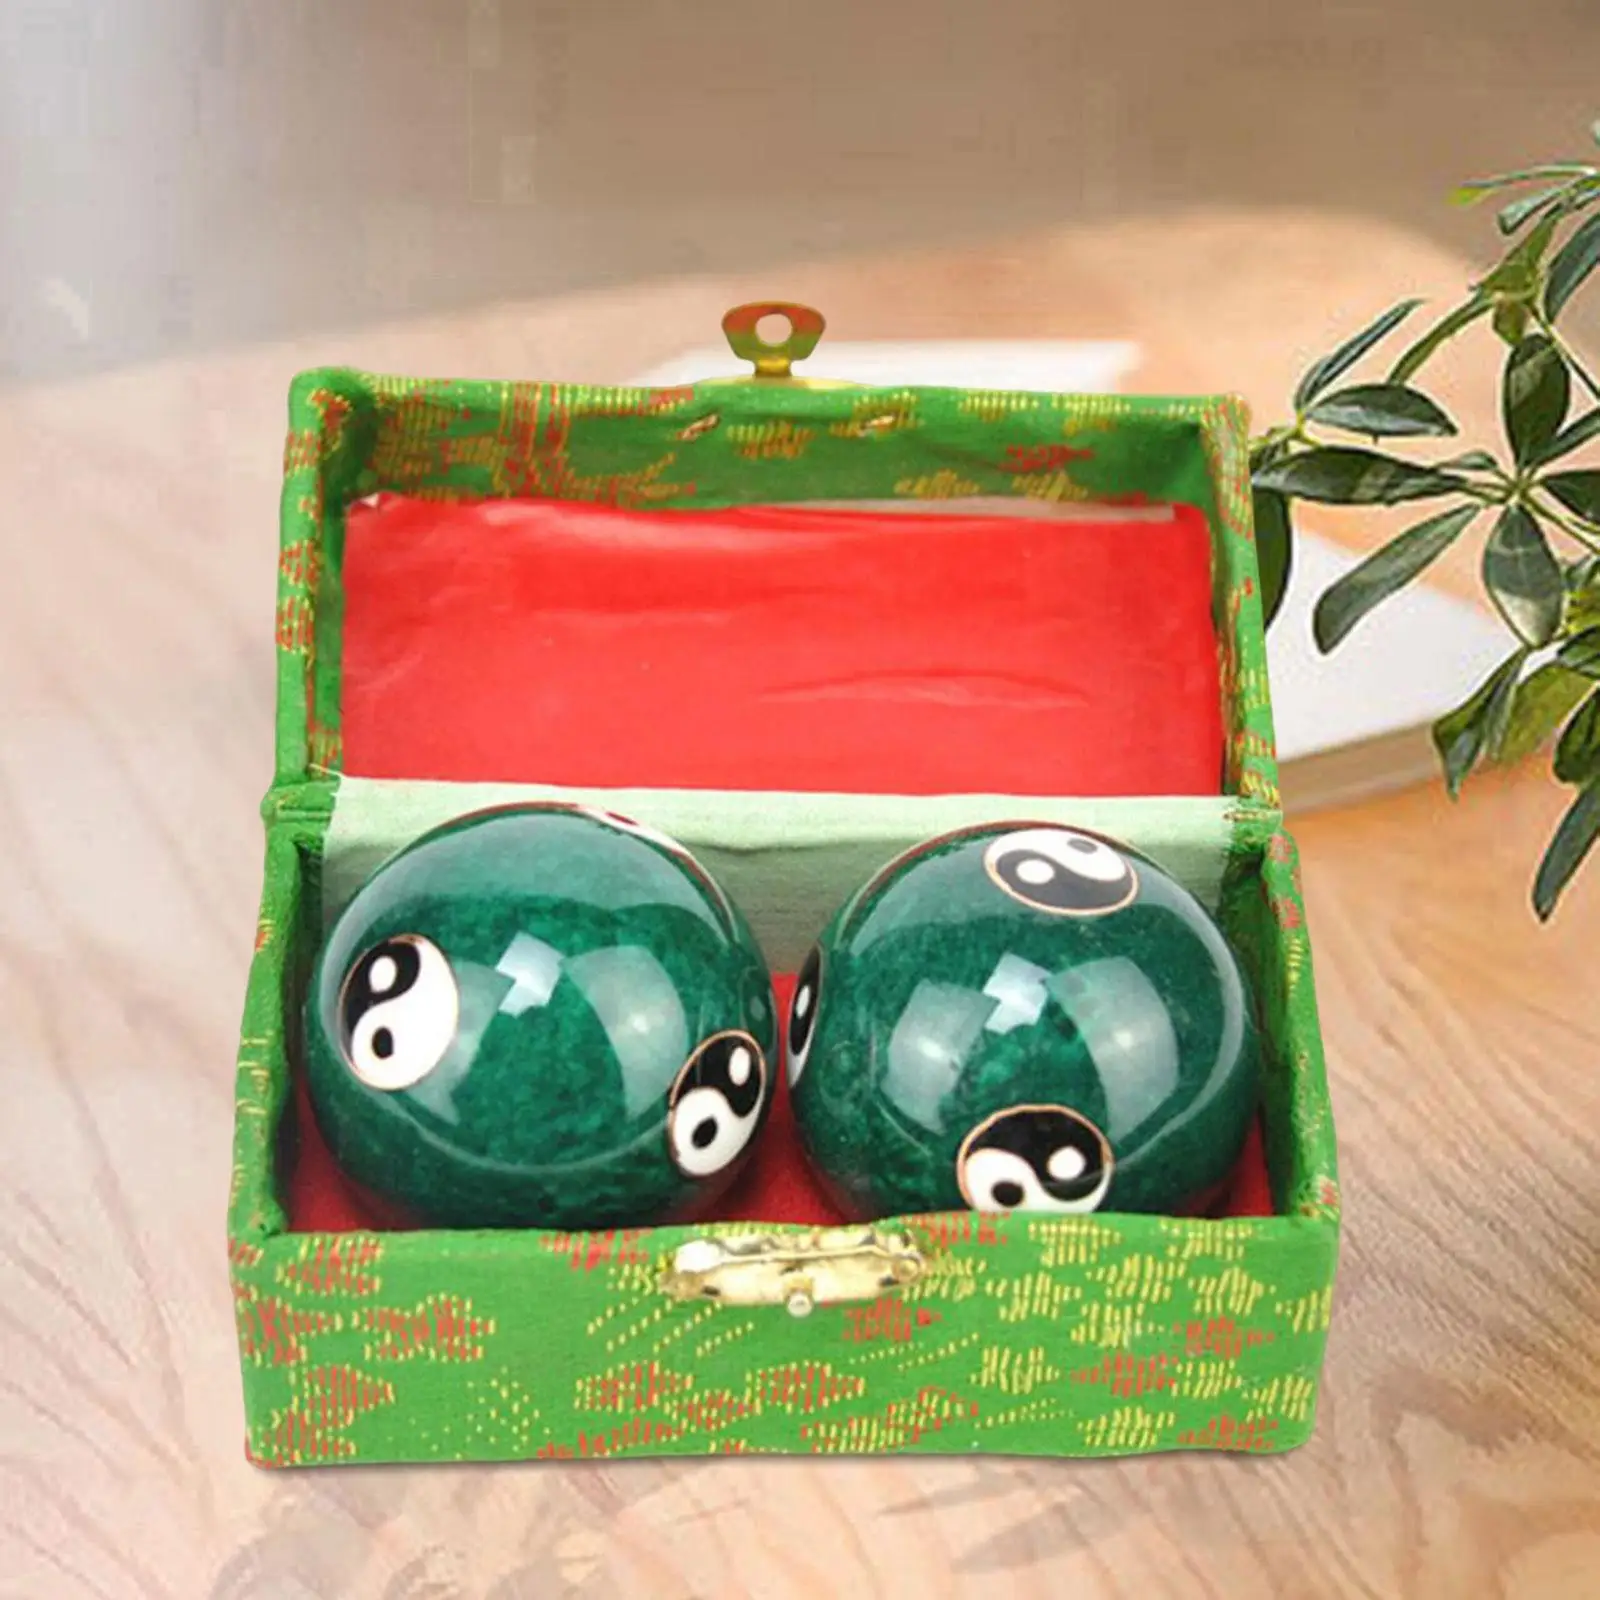 2Pcs Hand Massage Balls with Storage Box Fitness Hand Wrist Strengthening Exerciser Chinese Baoding Balls for Children Parents